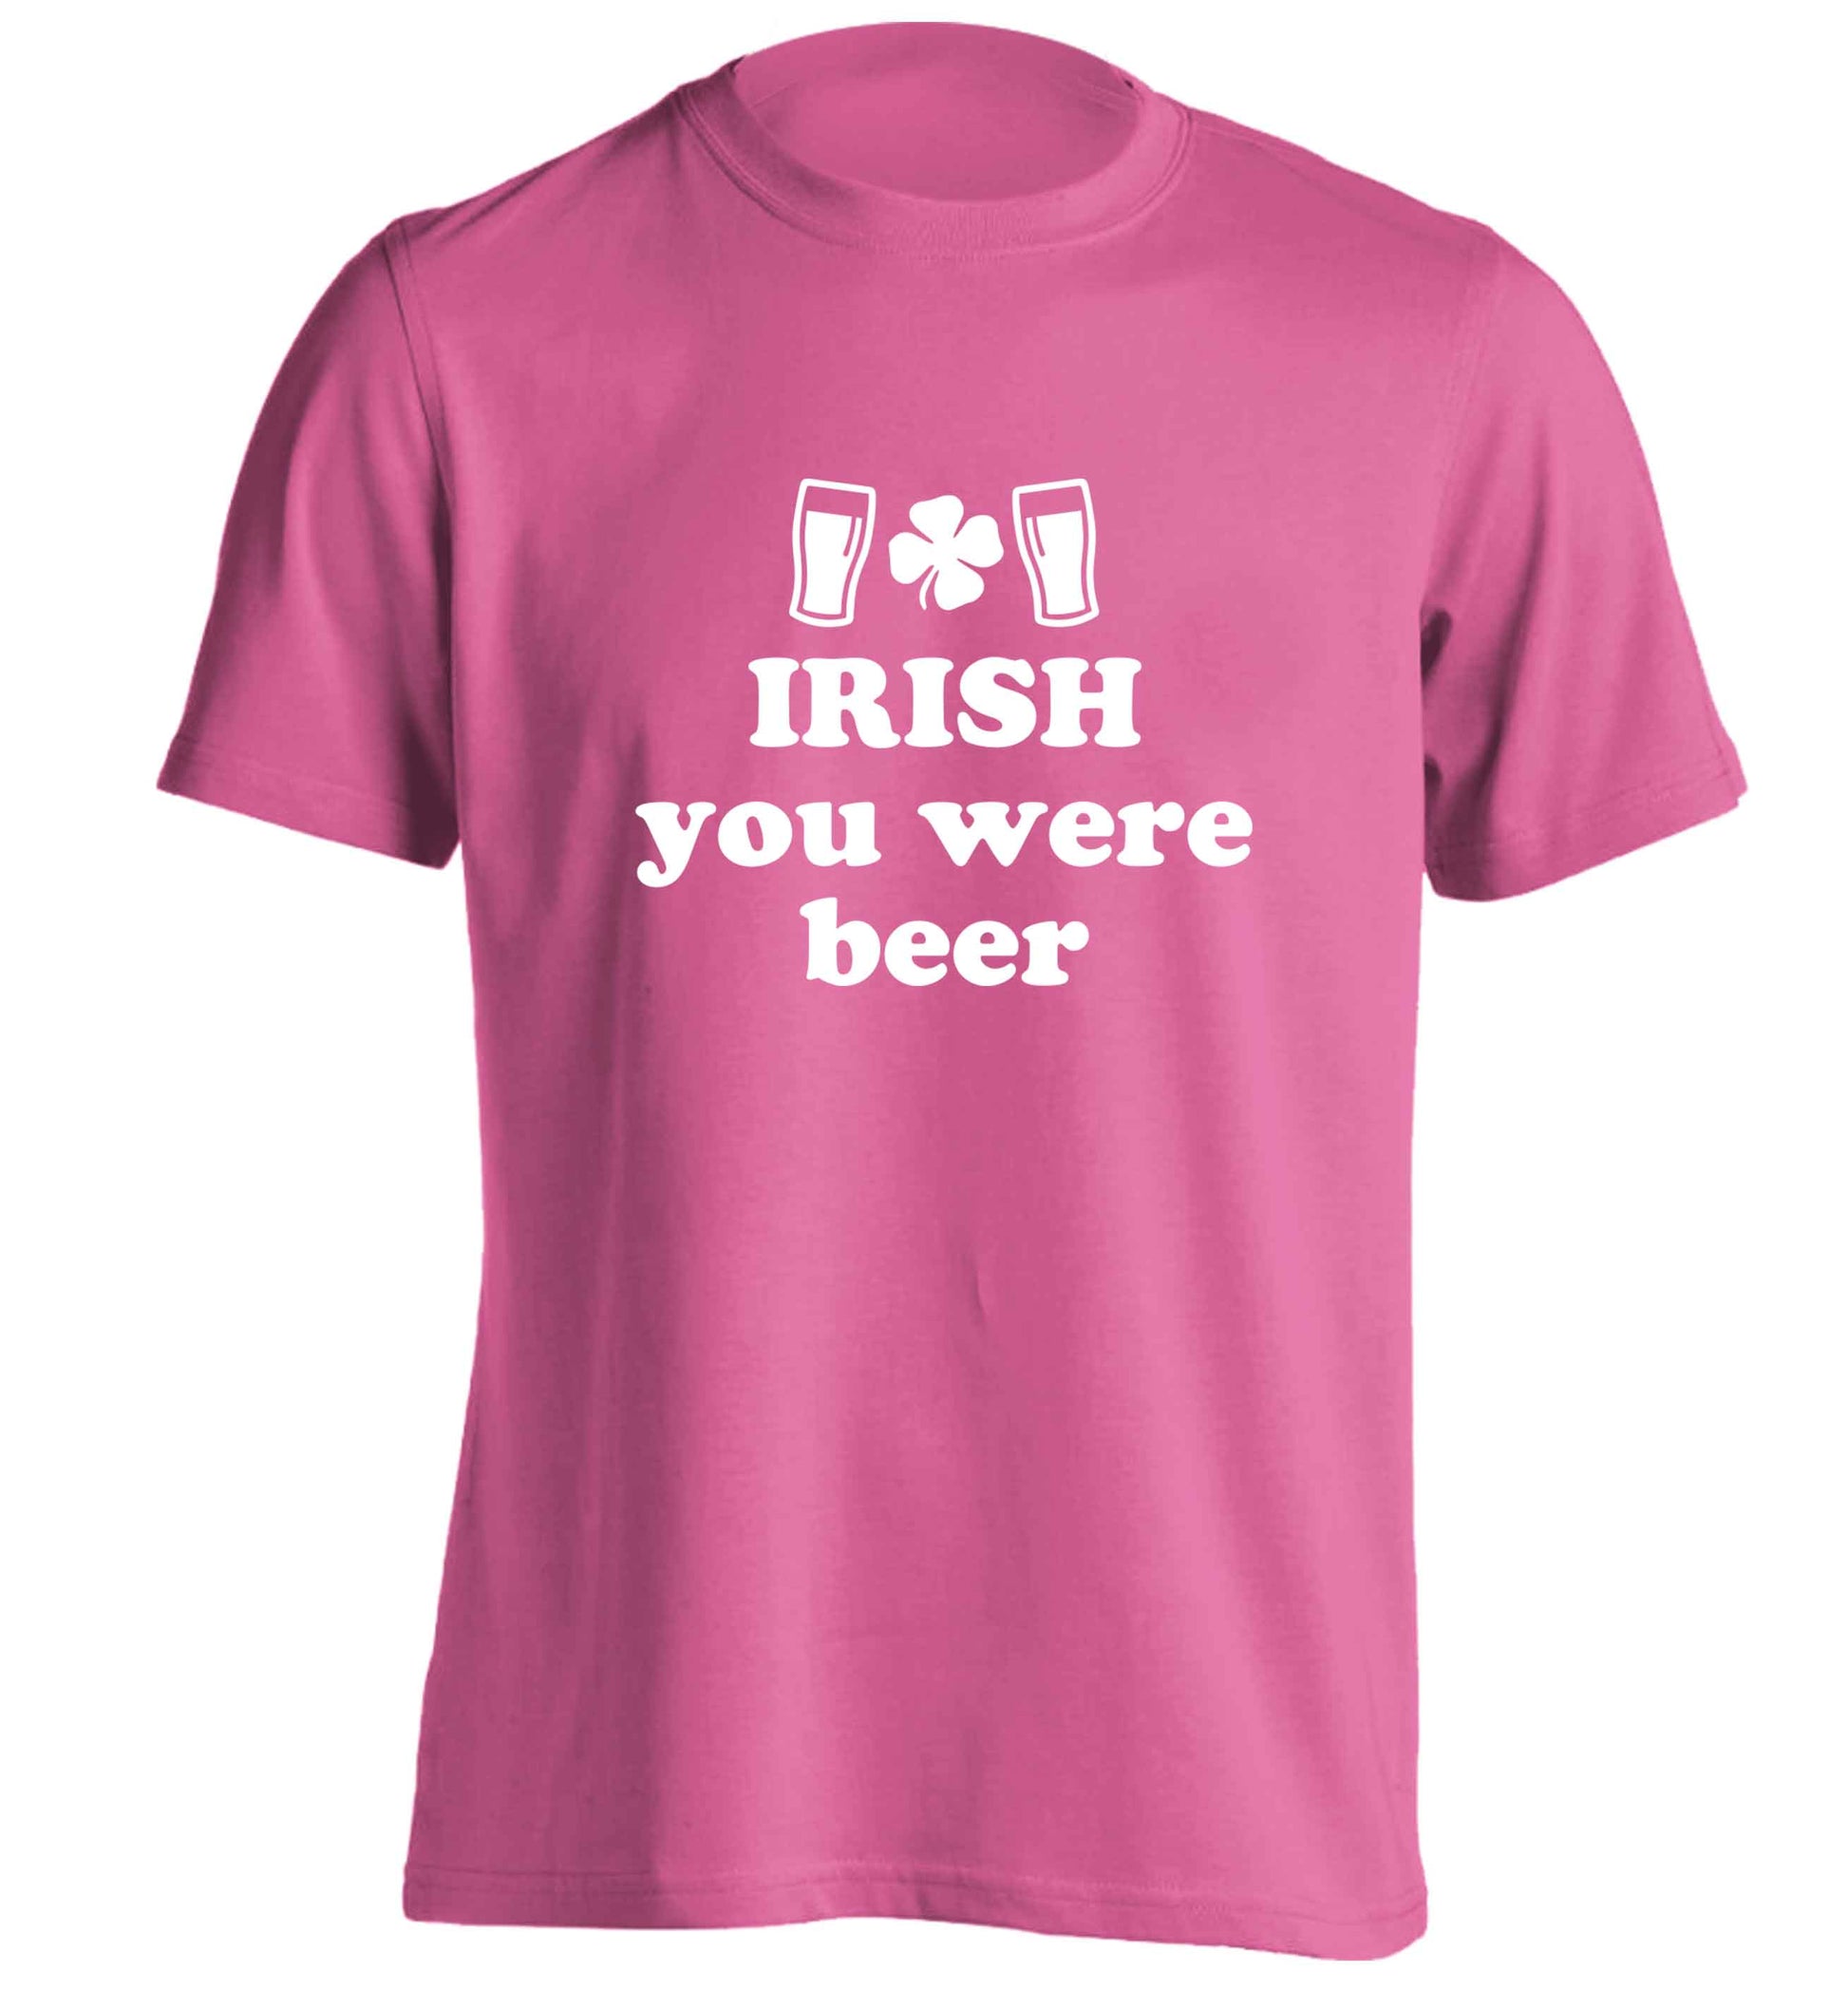 Irish you were beer adults unisex pink Tshirt 2XL